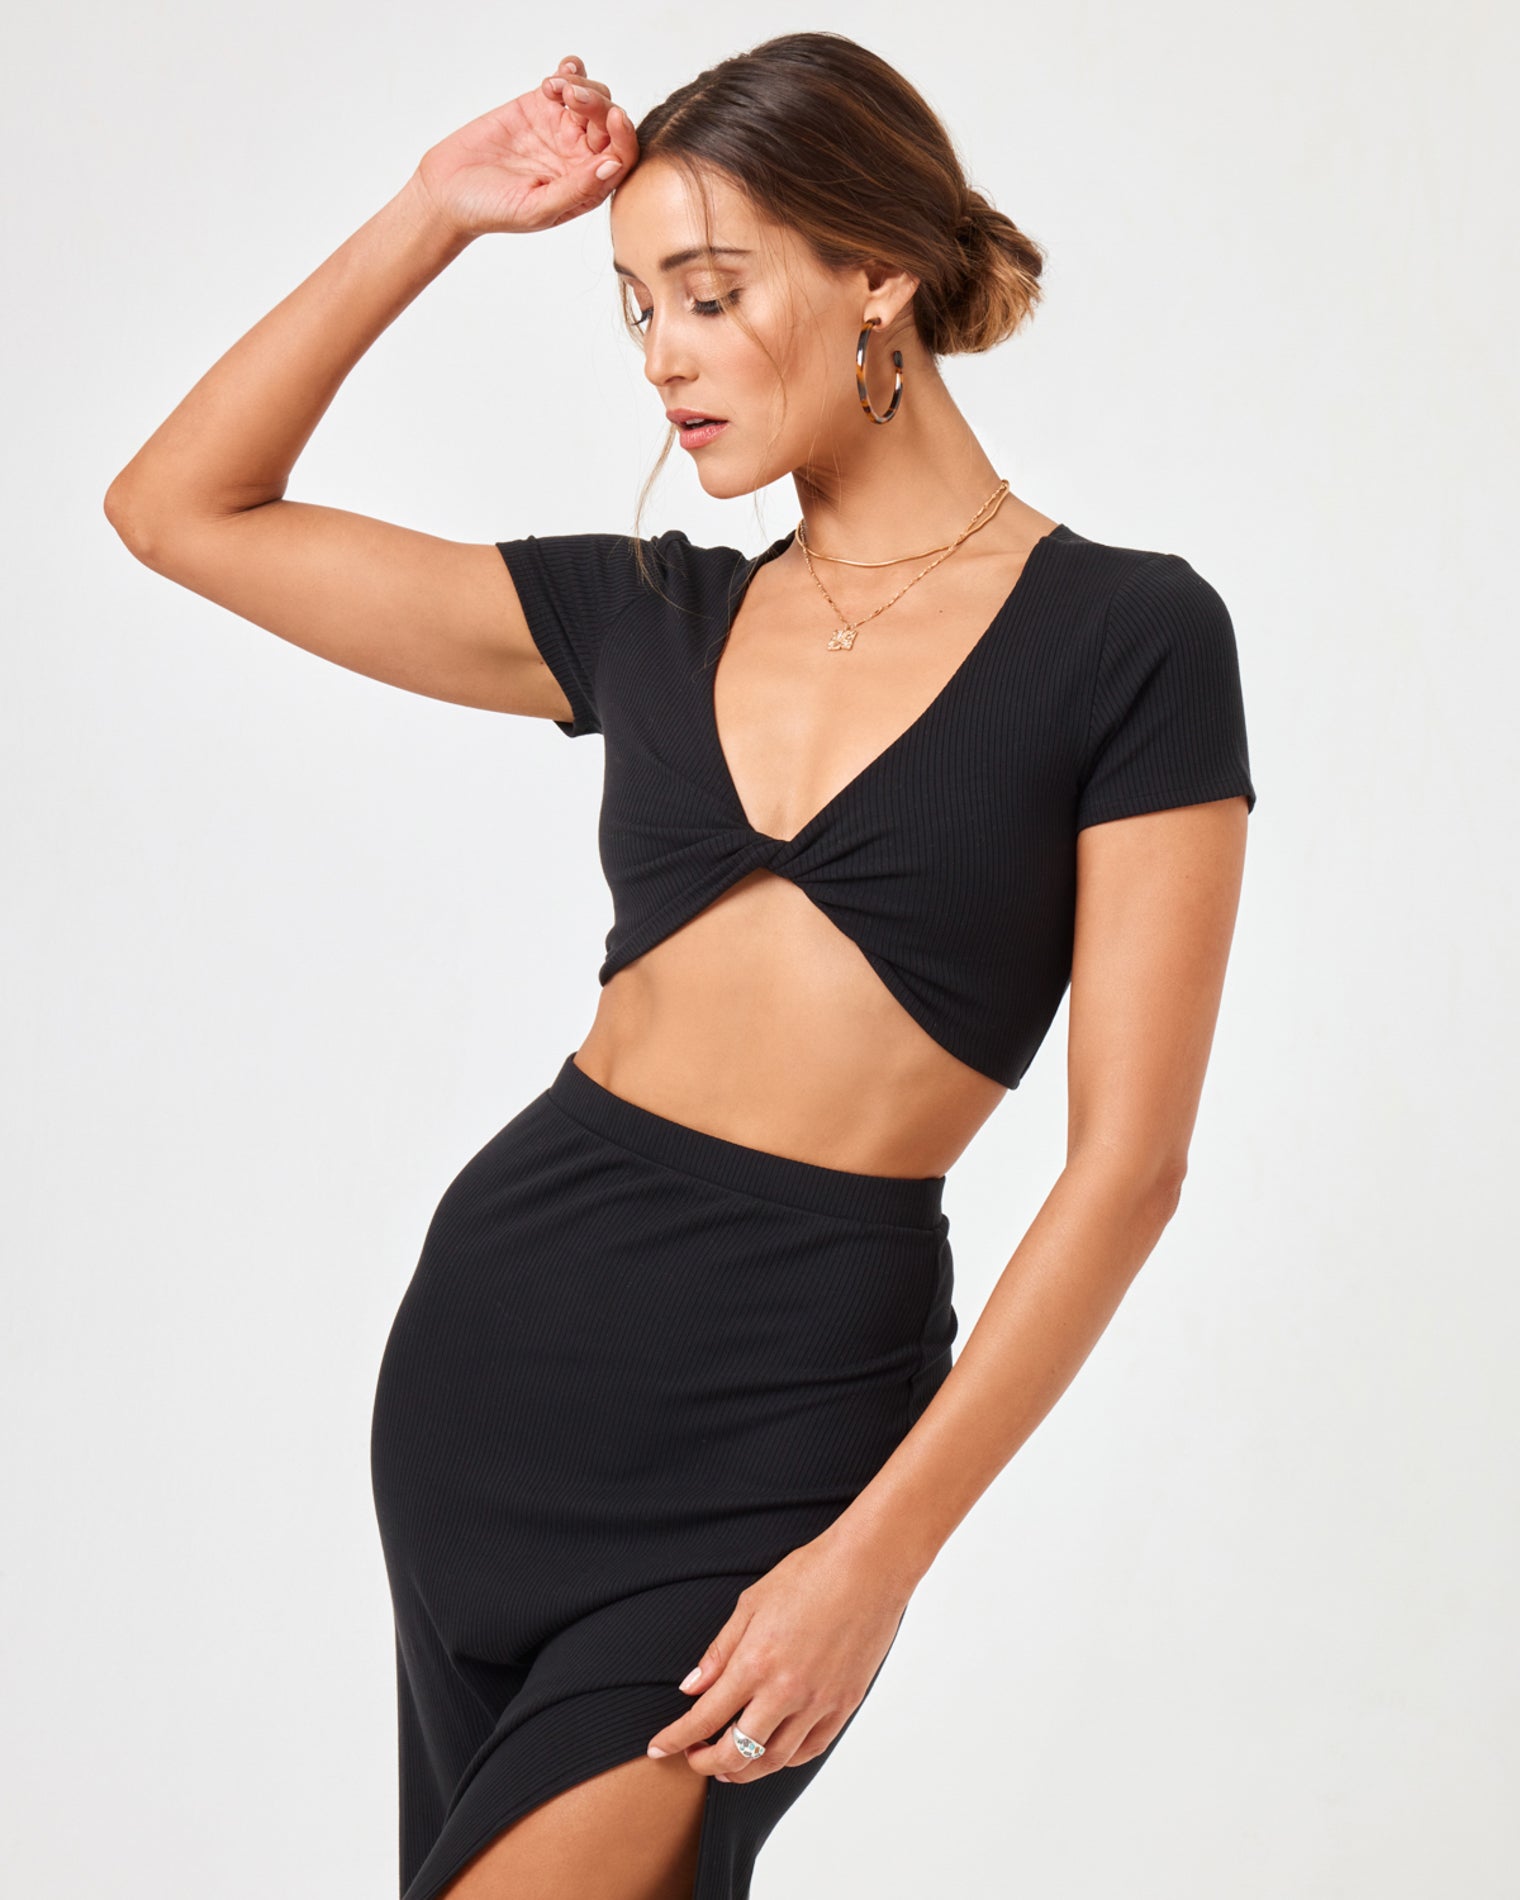 LSPACE x HANNA MONTAZAMI Isla Skirt - Black Black | Model: Anna (size: S)